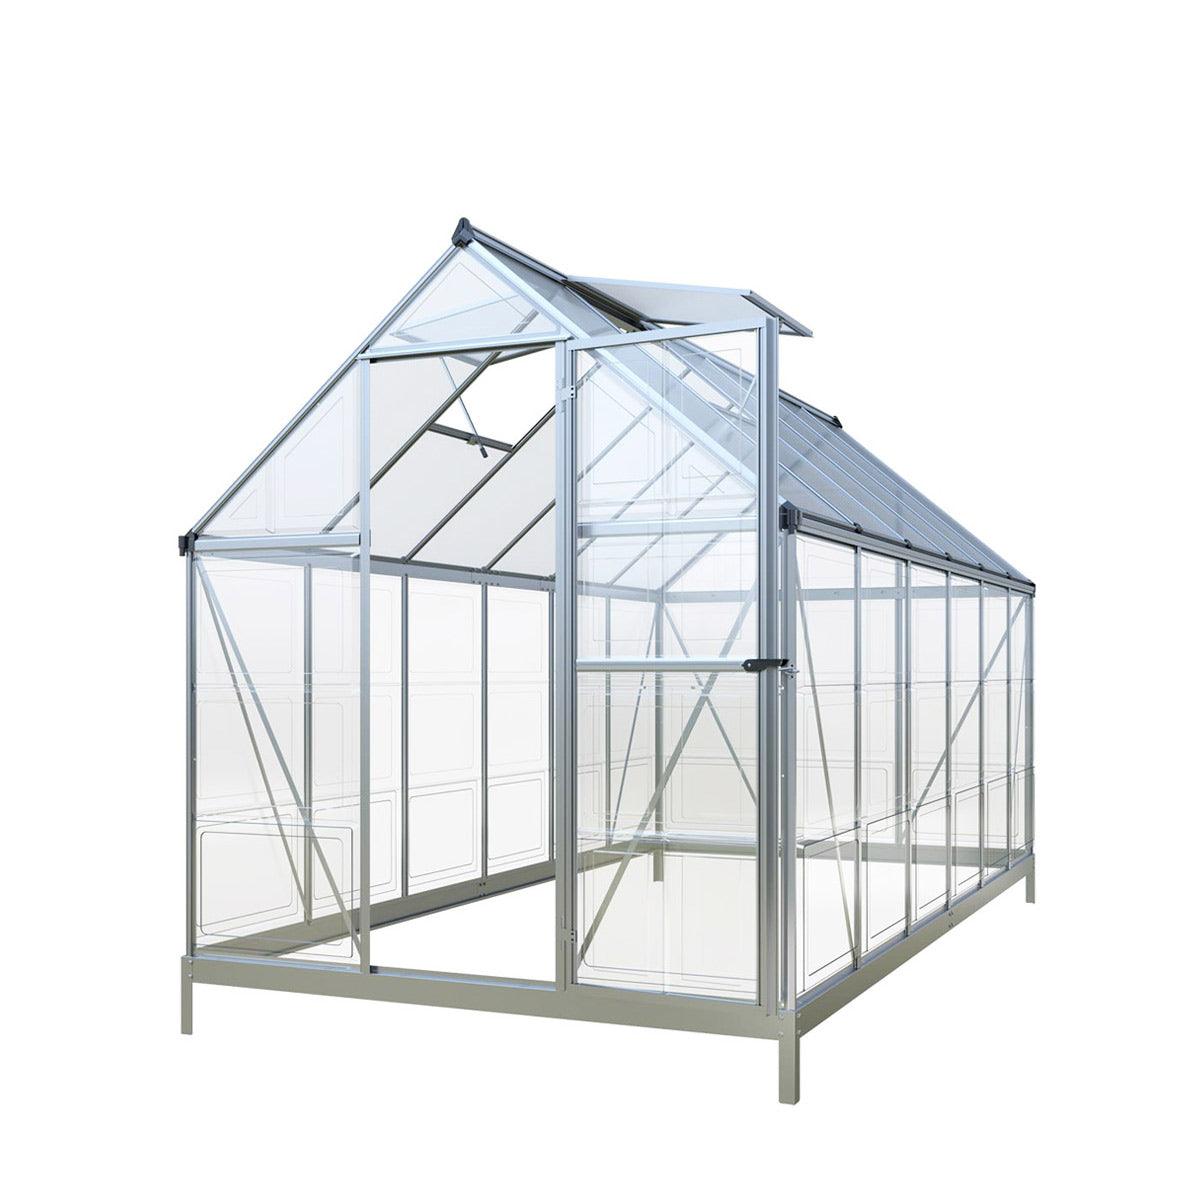 TMG Industrial 6’ x 12’ Crystal Clear Greenhouse